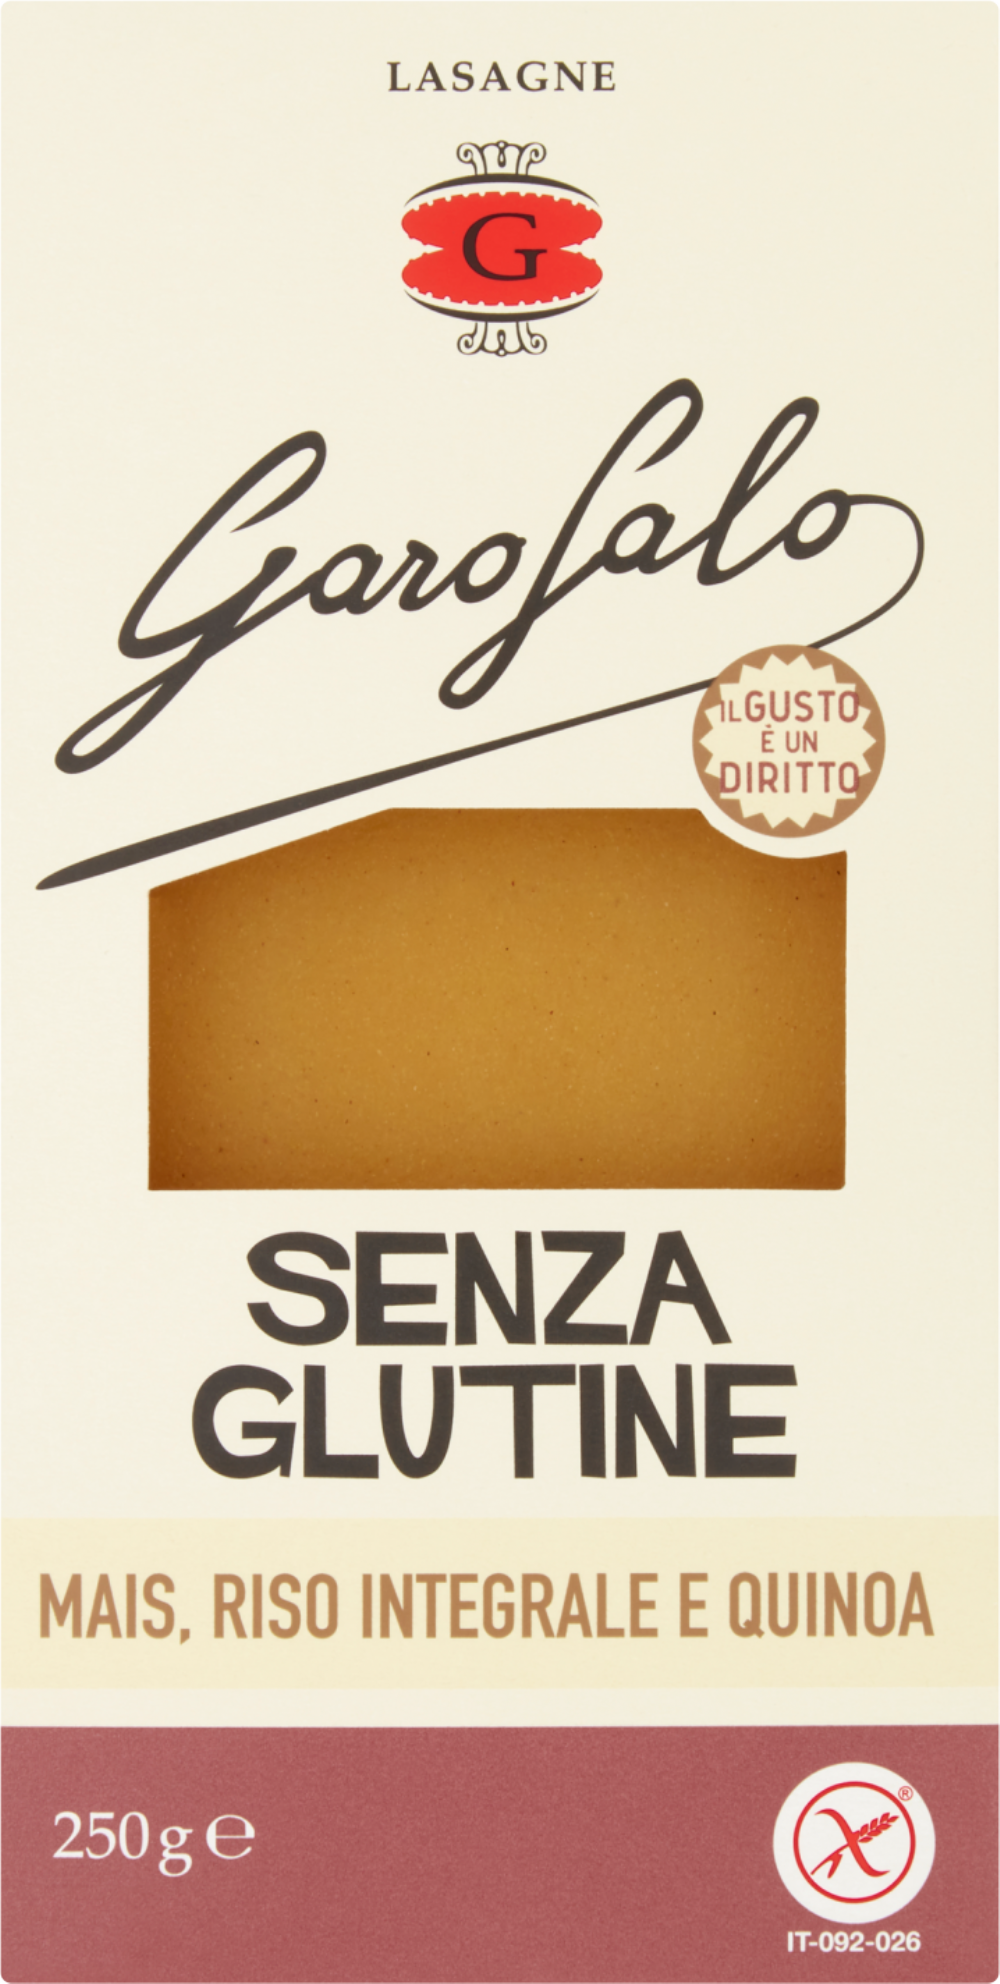 GAROFALO Gluten Free Lasagne 250g